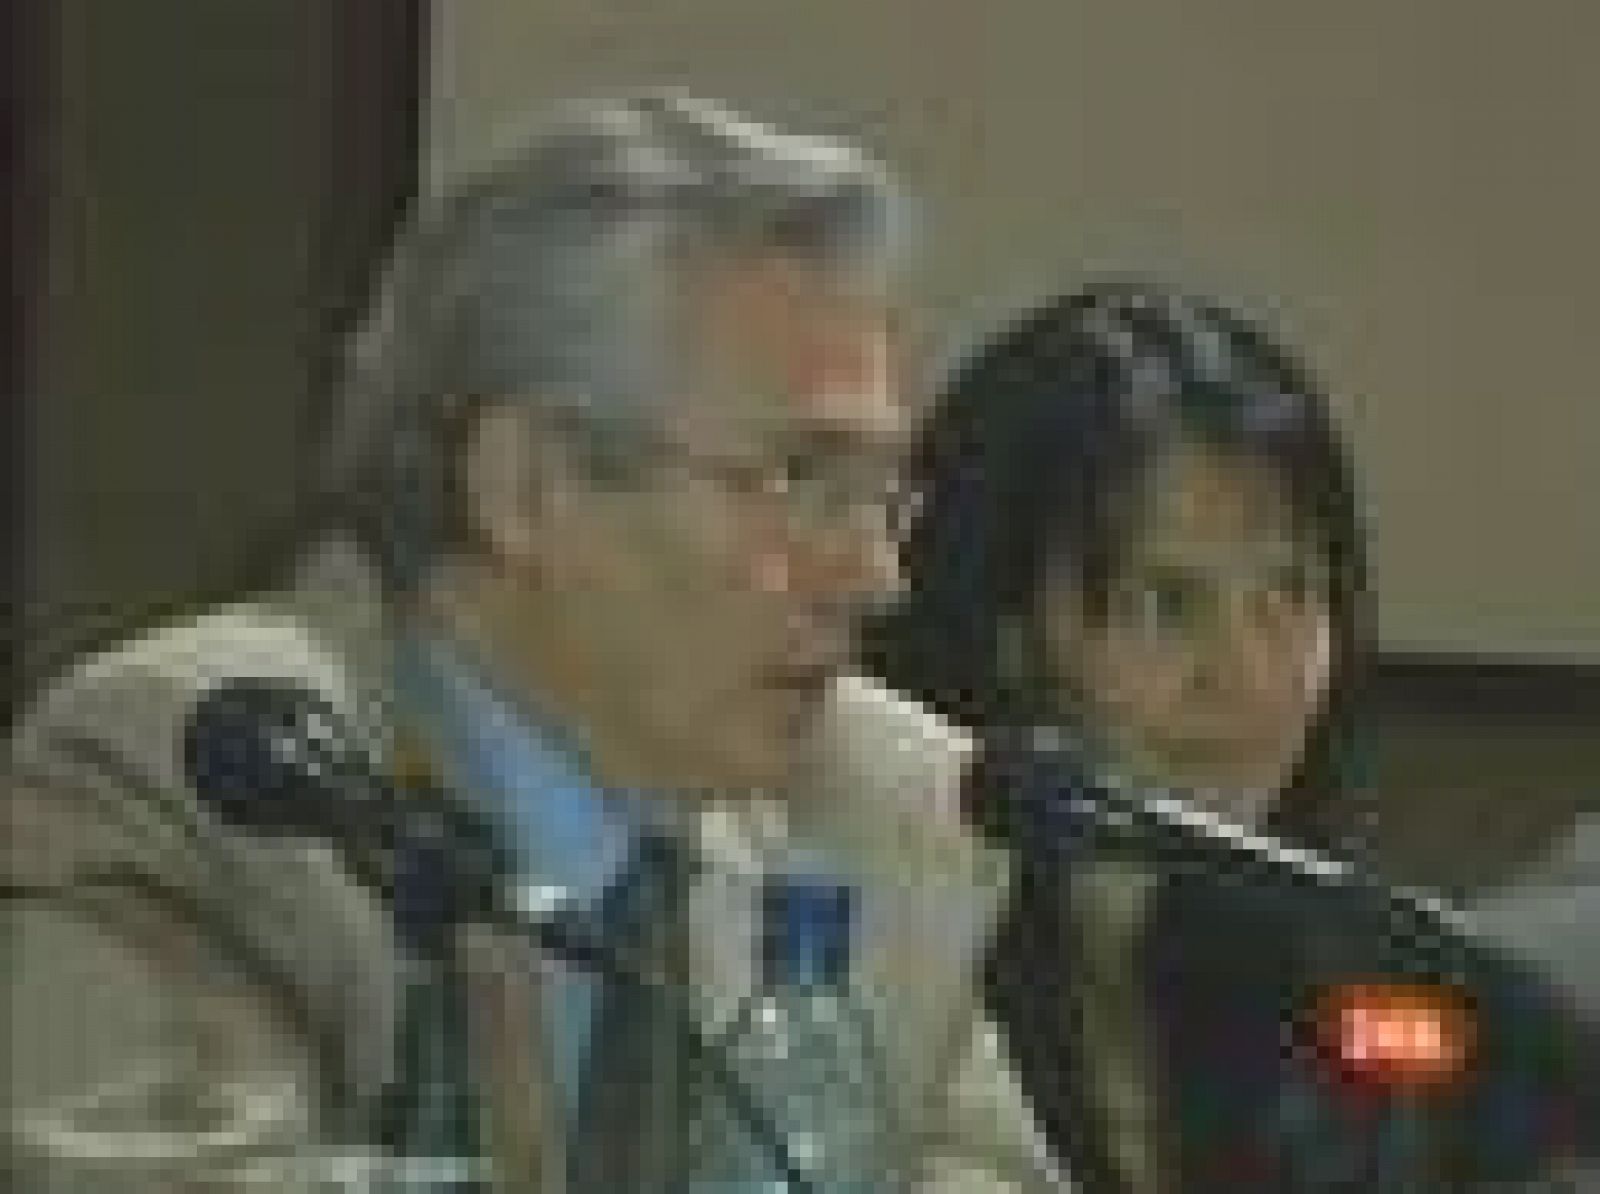  Baltasar Garzón durante una conferencia en Guatemala